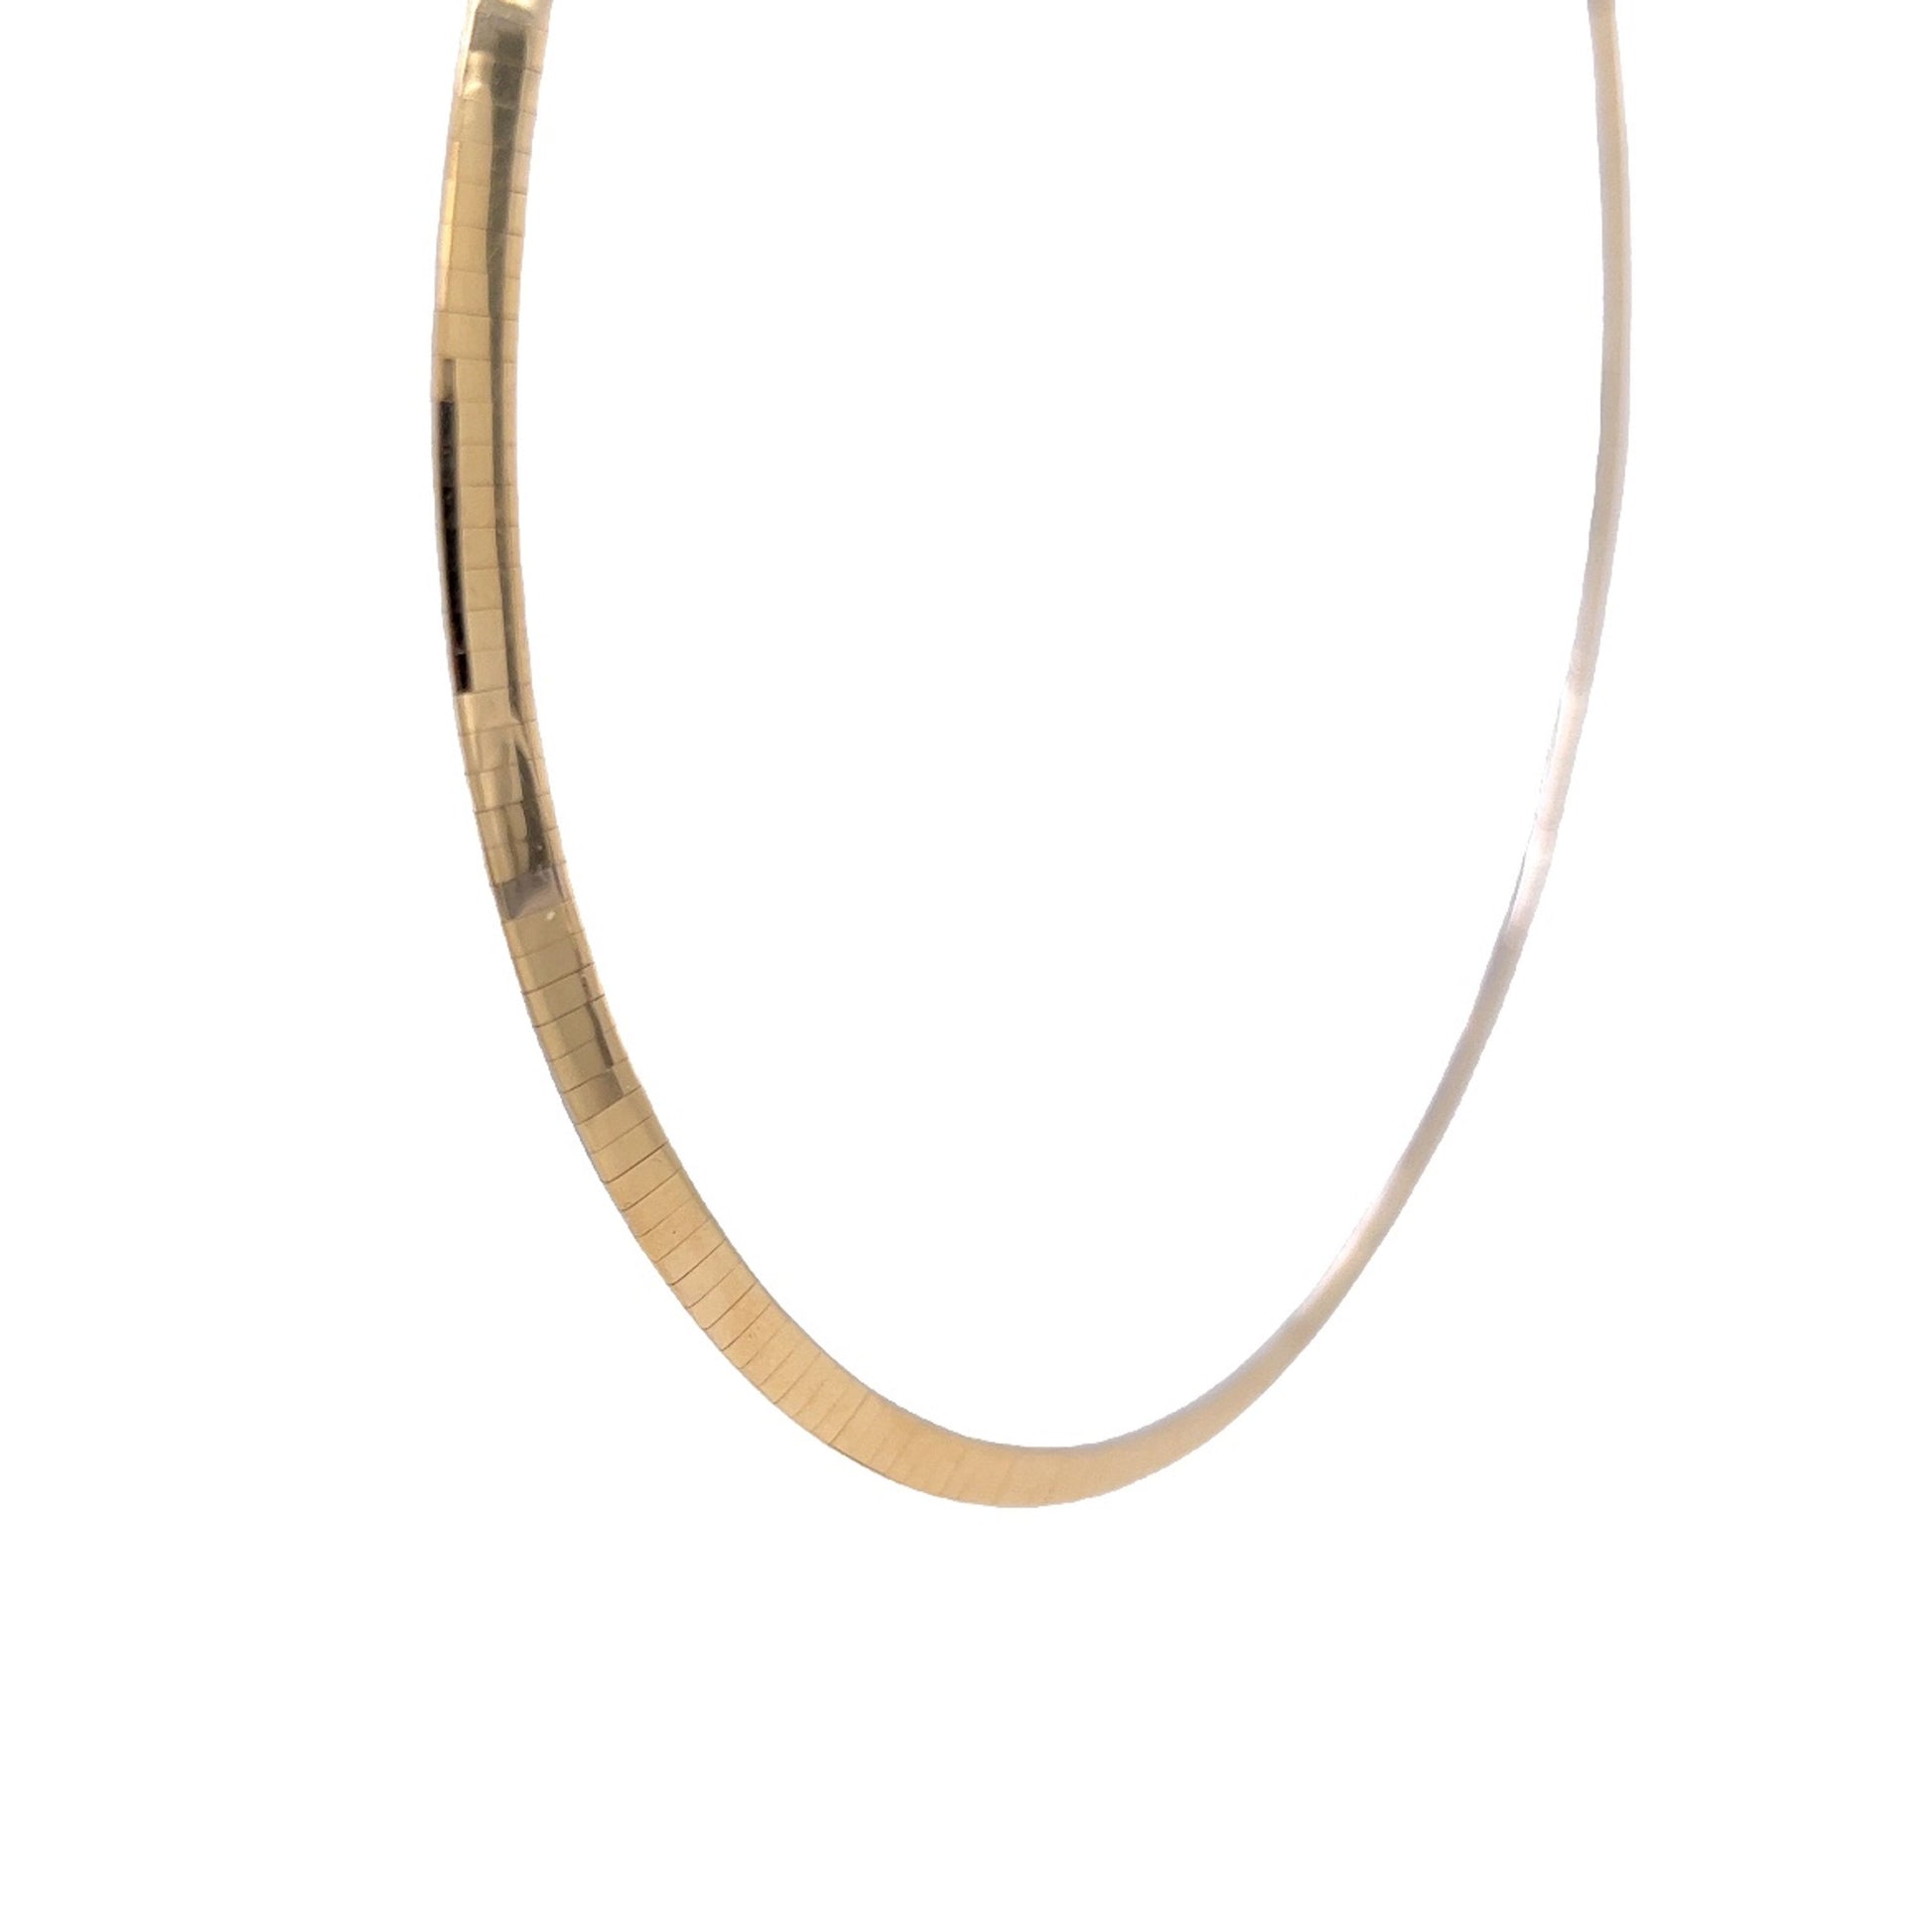 Two-Tone Reversible Omega Necklace in 14k GoldComposition: 14 Karat White Gold/14 Karat Yellow Gold Total Gram Weight: 16.9 g Inscription: 14K ITALY SAK
      